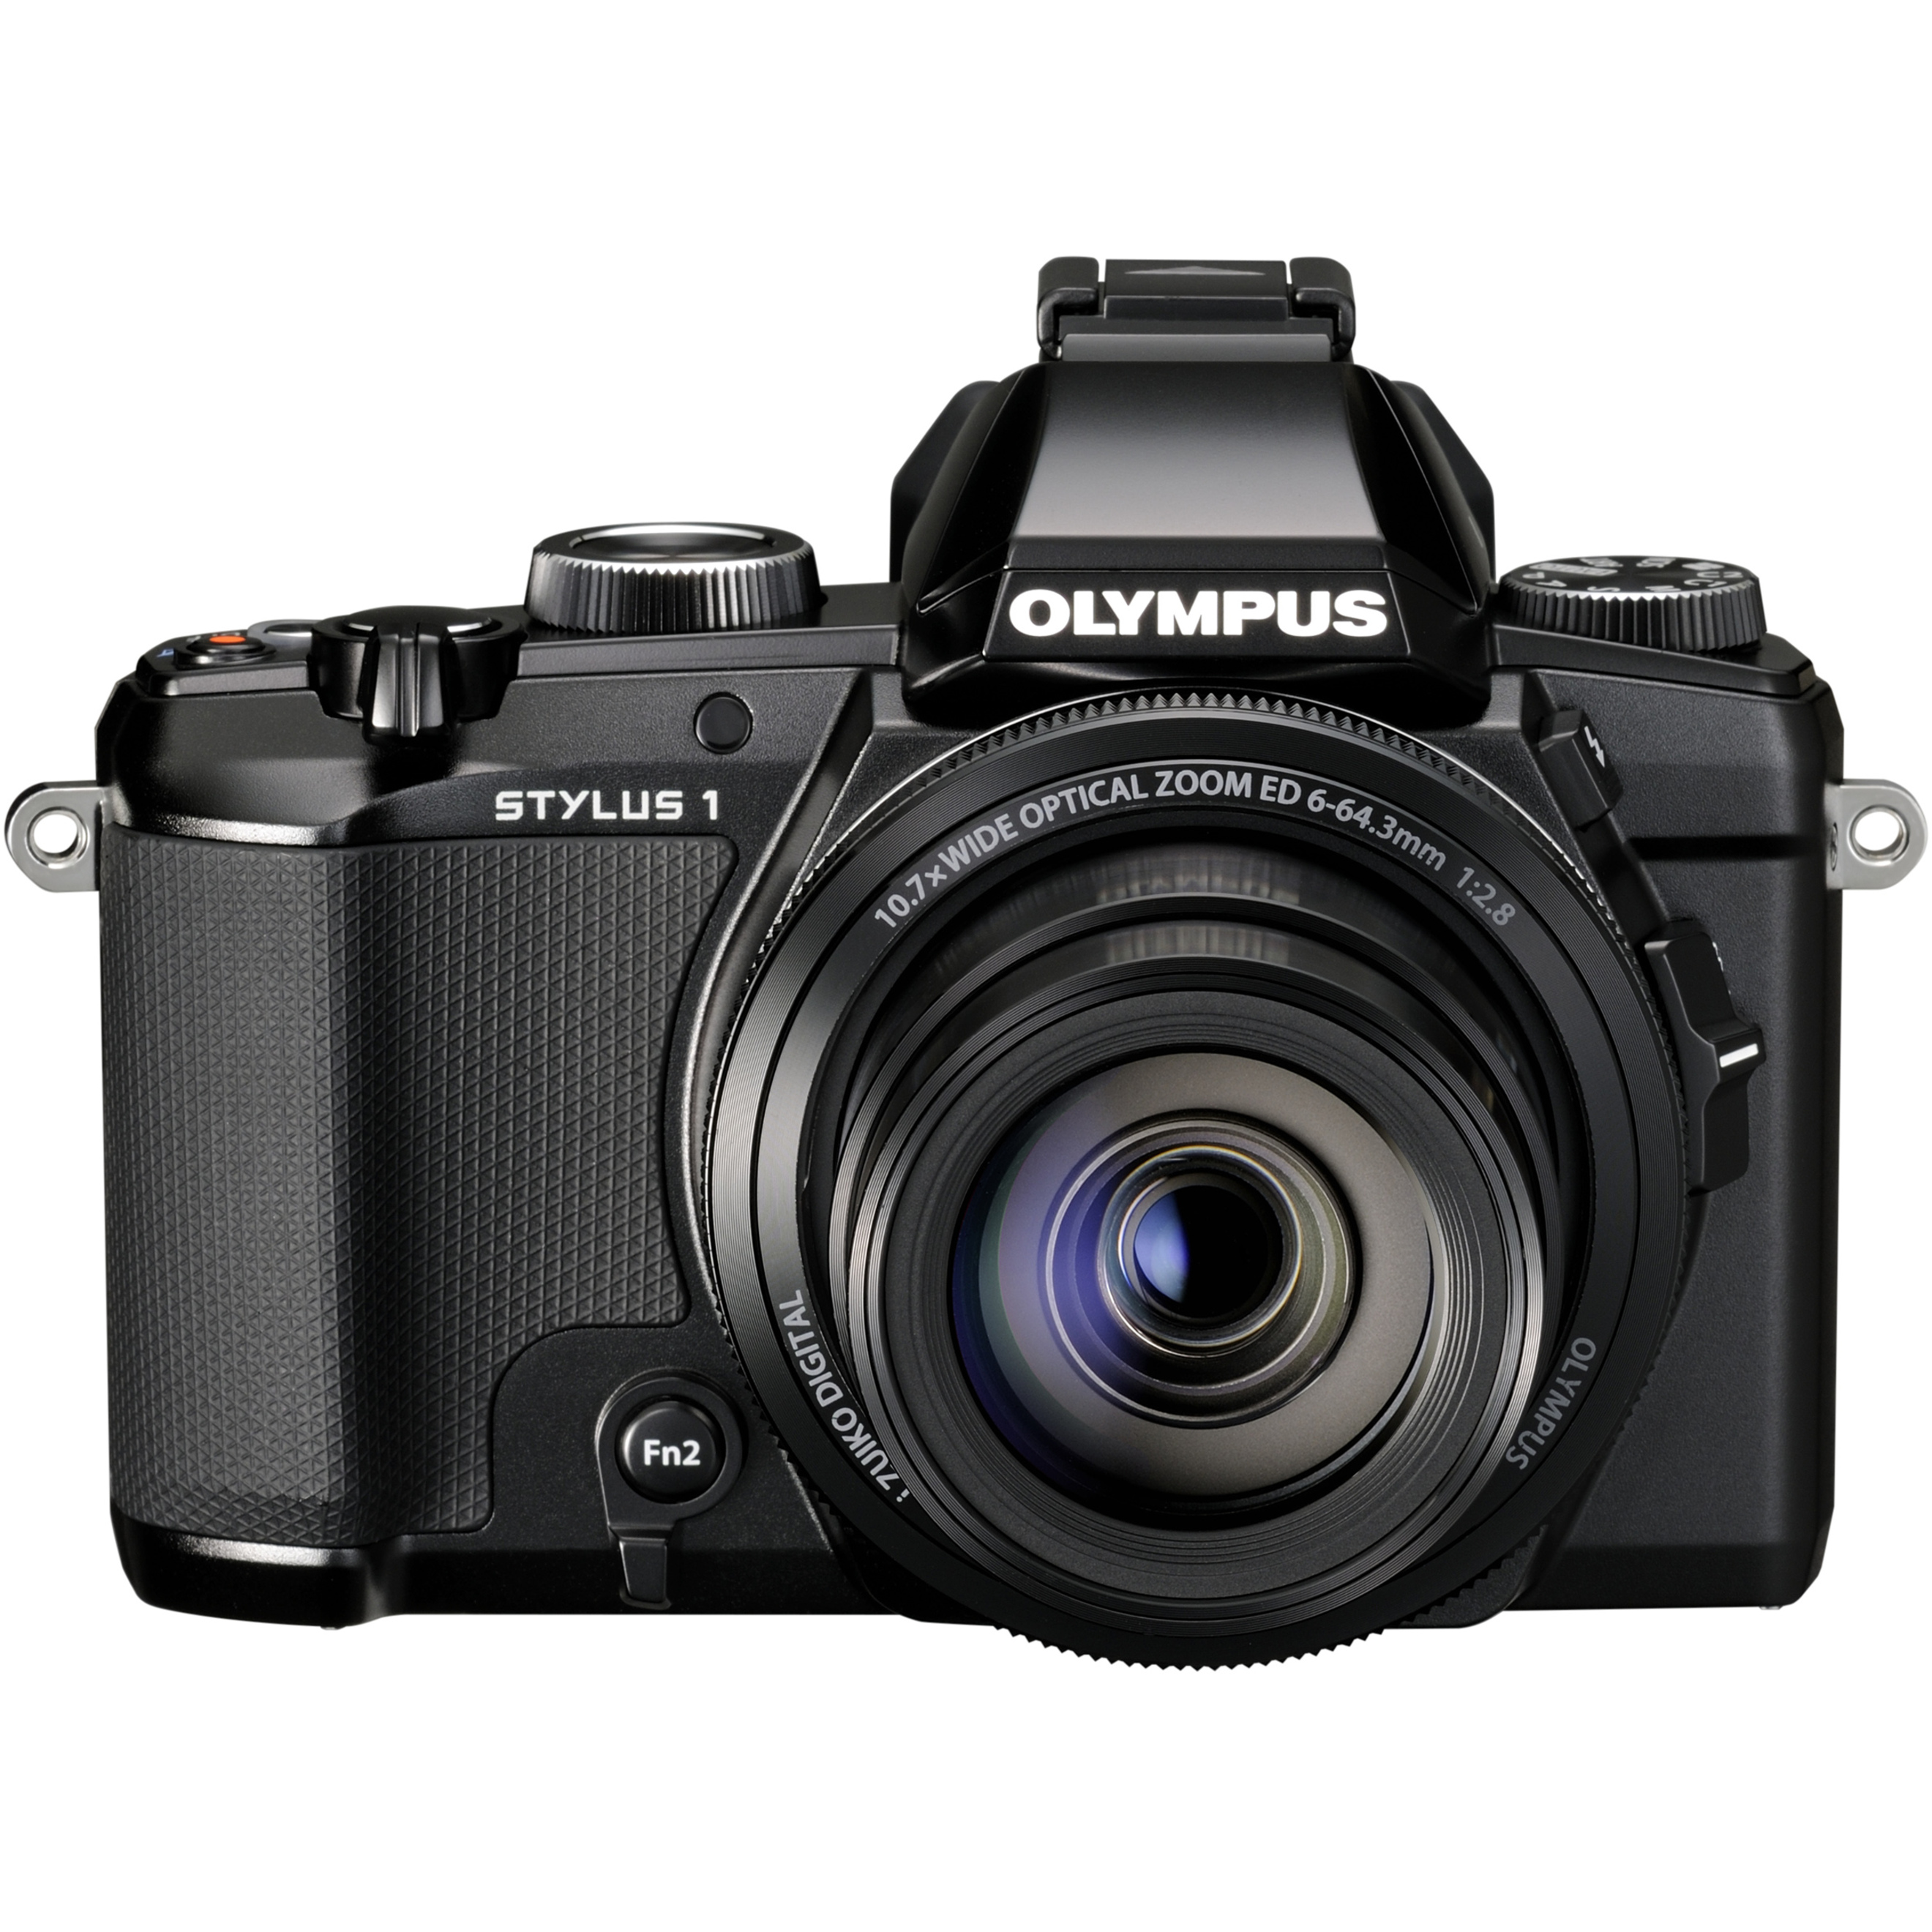 Olympus STYLUS 1 12 Megapixel Bridge Camera - image 1 of 4